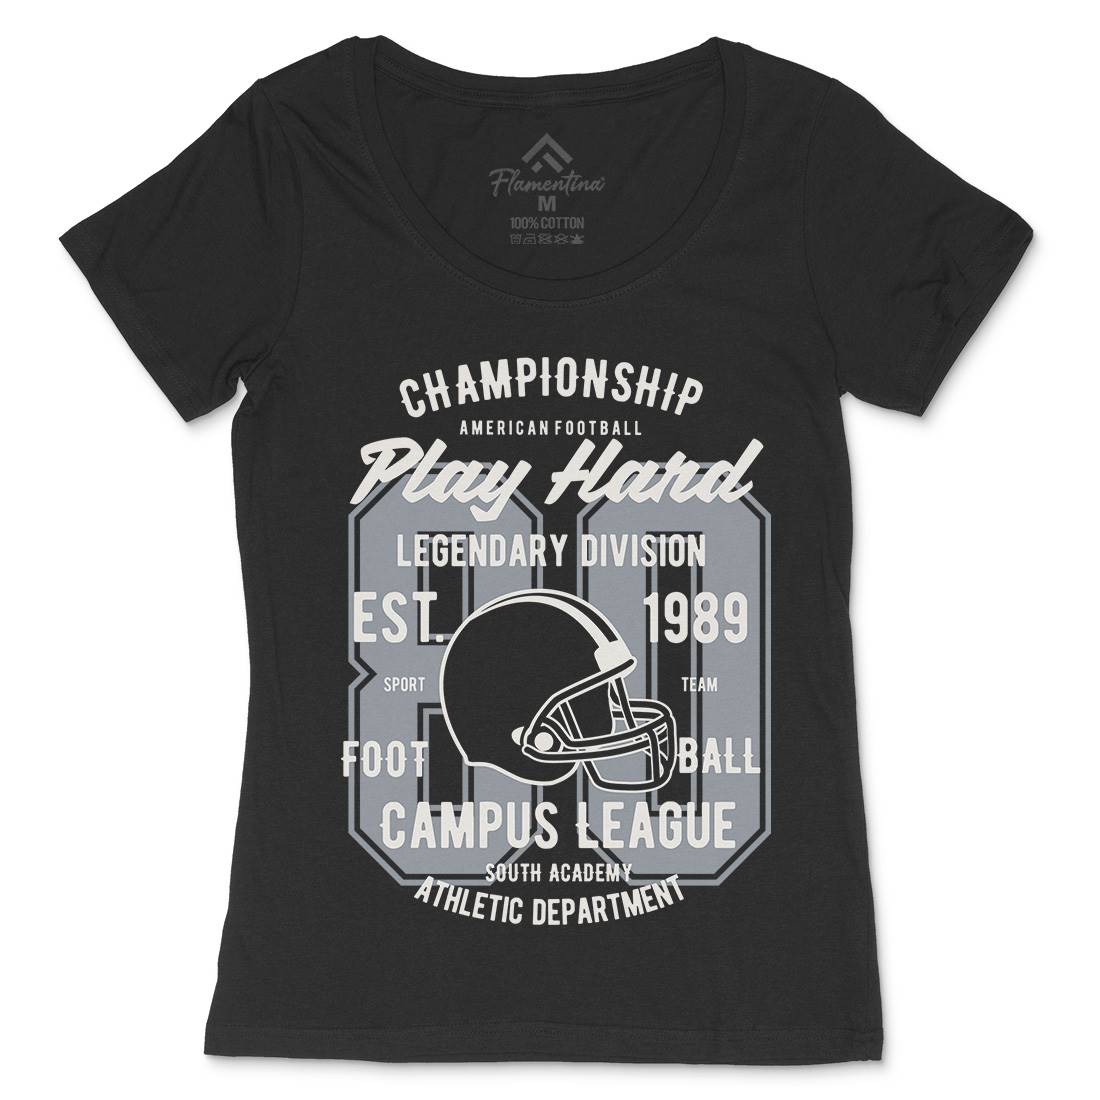 Play Hard Football Womens Scoop Neck T-Shirt Sport B435